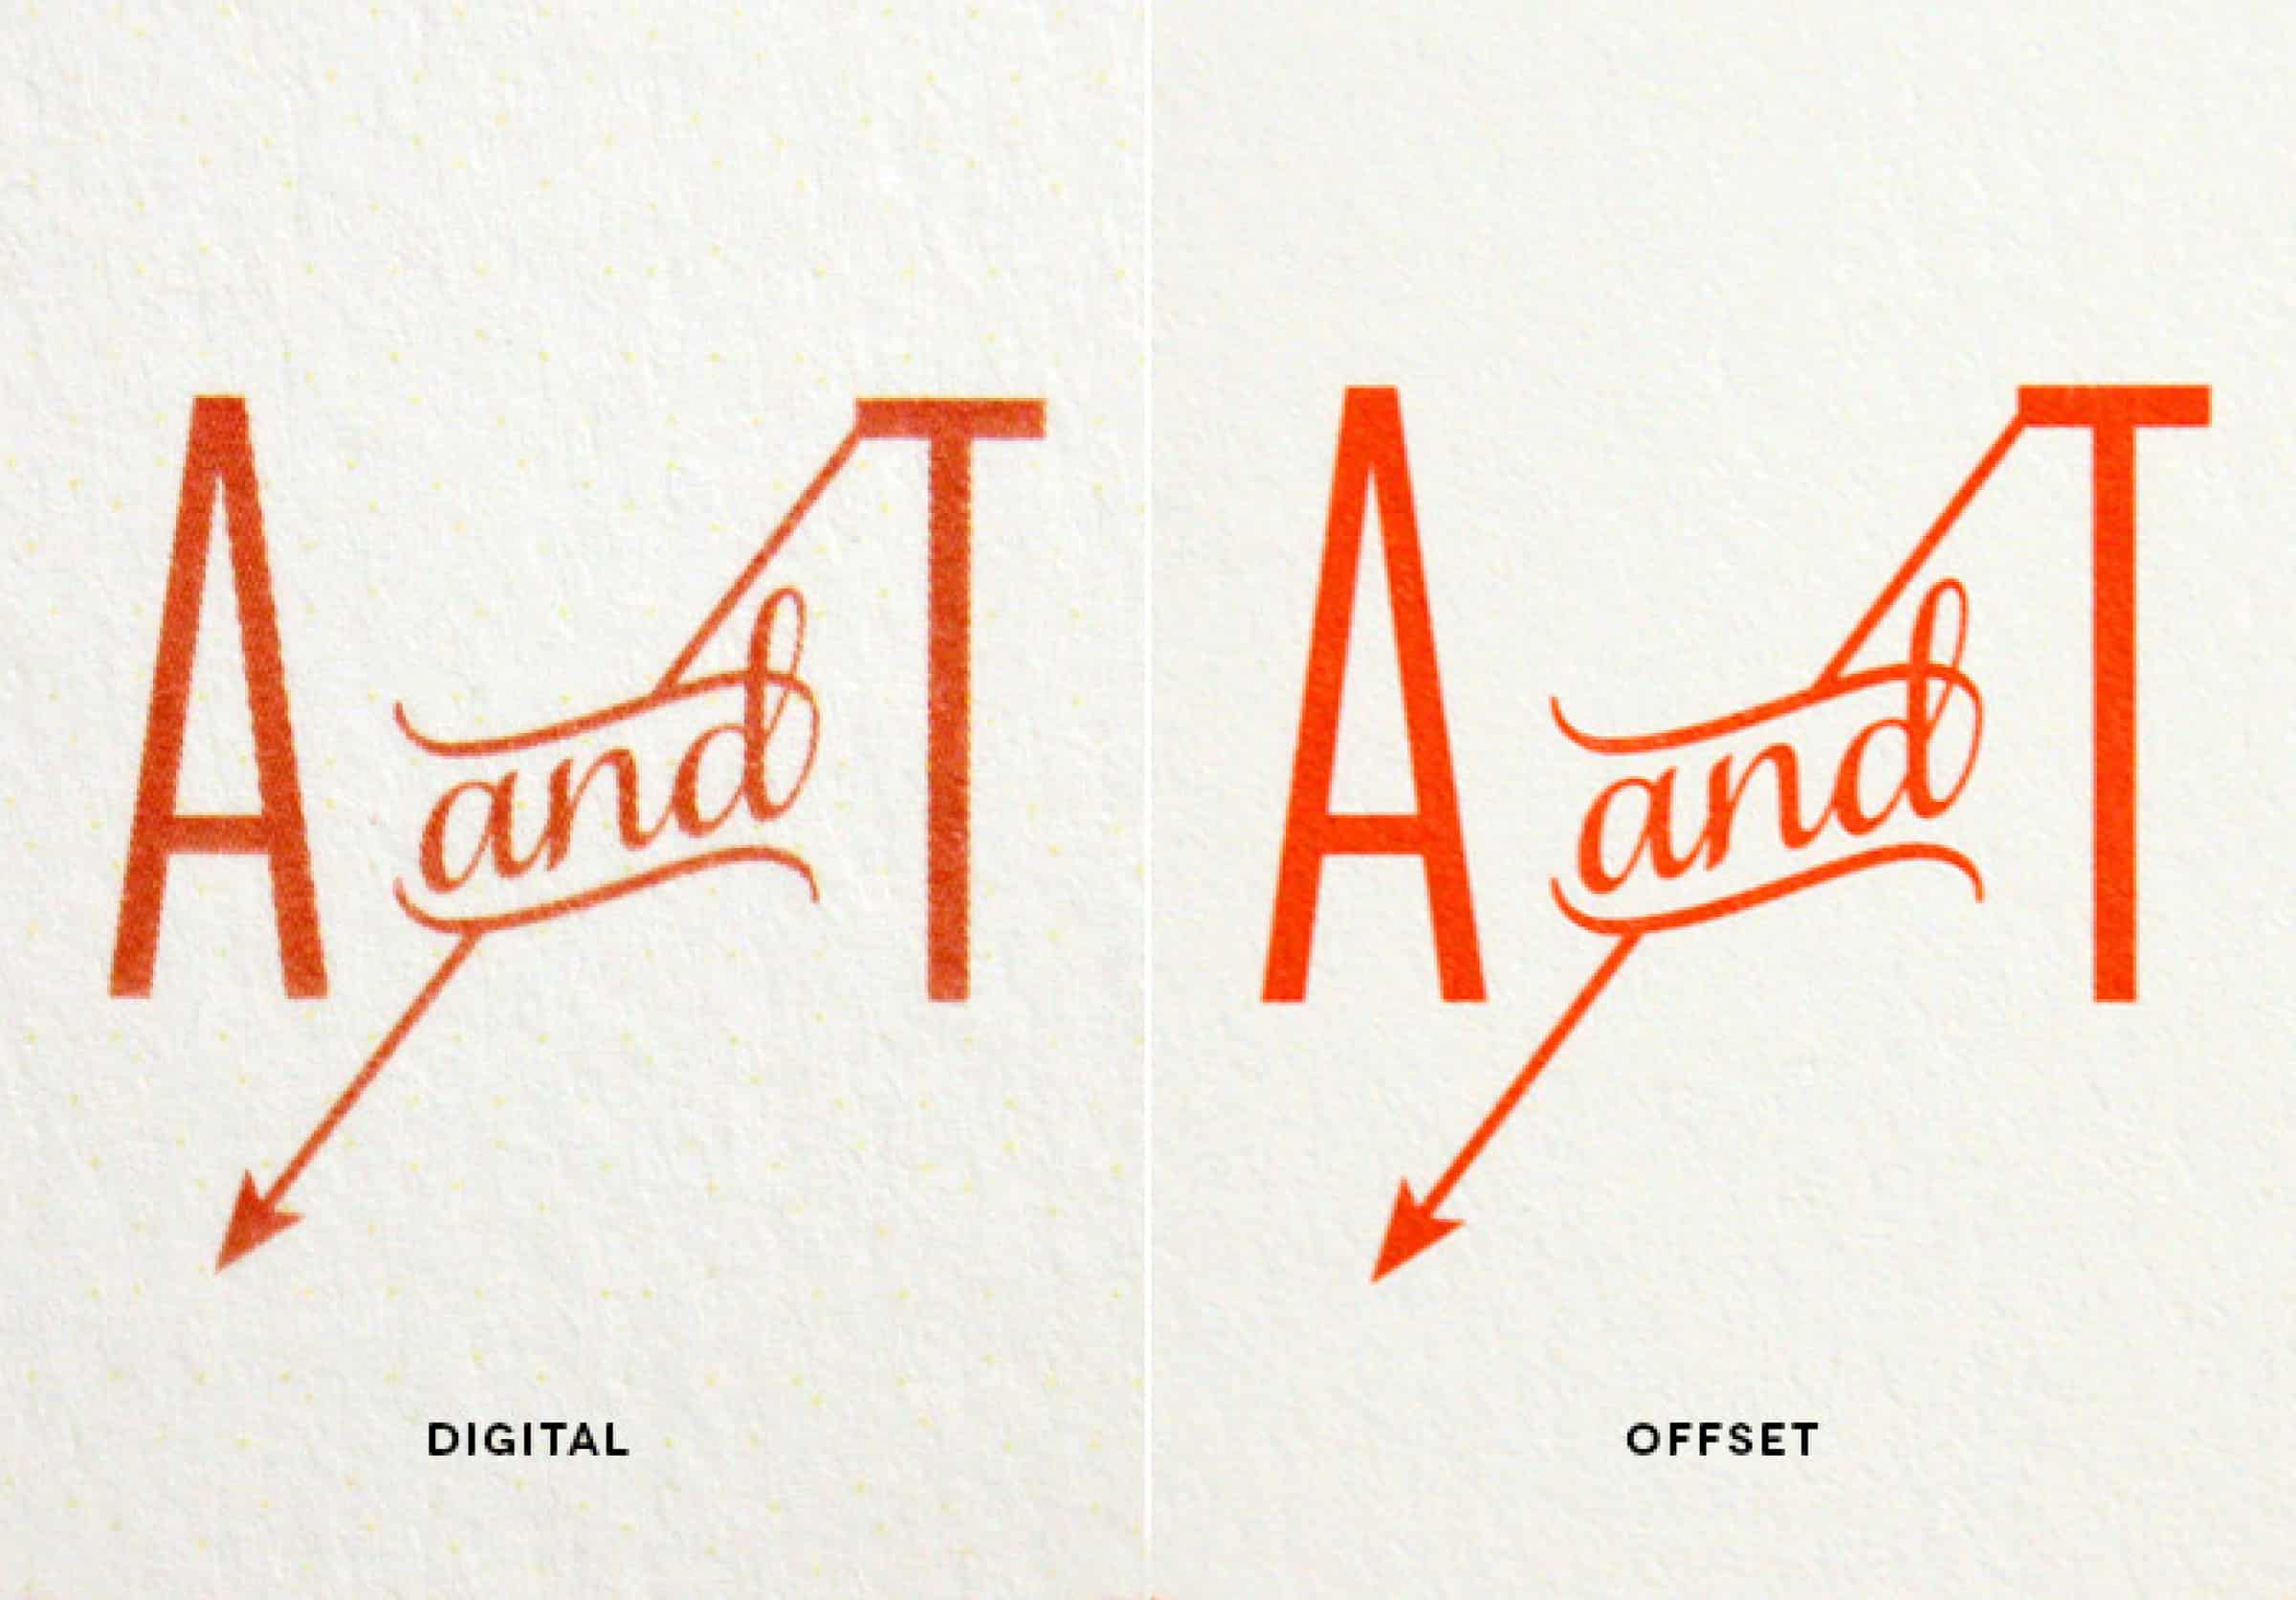 Digital vs offset printing on paper comparsion. 